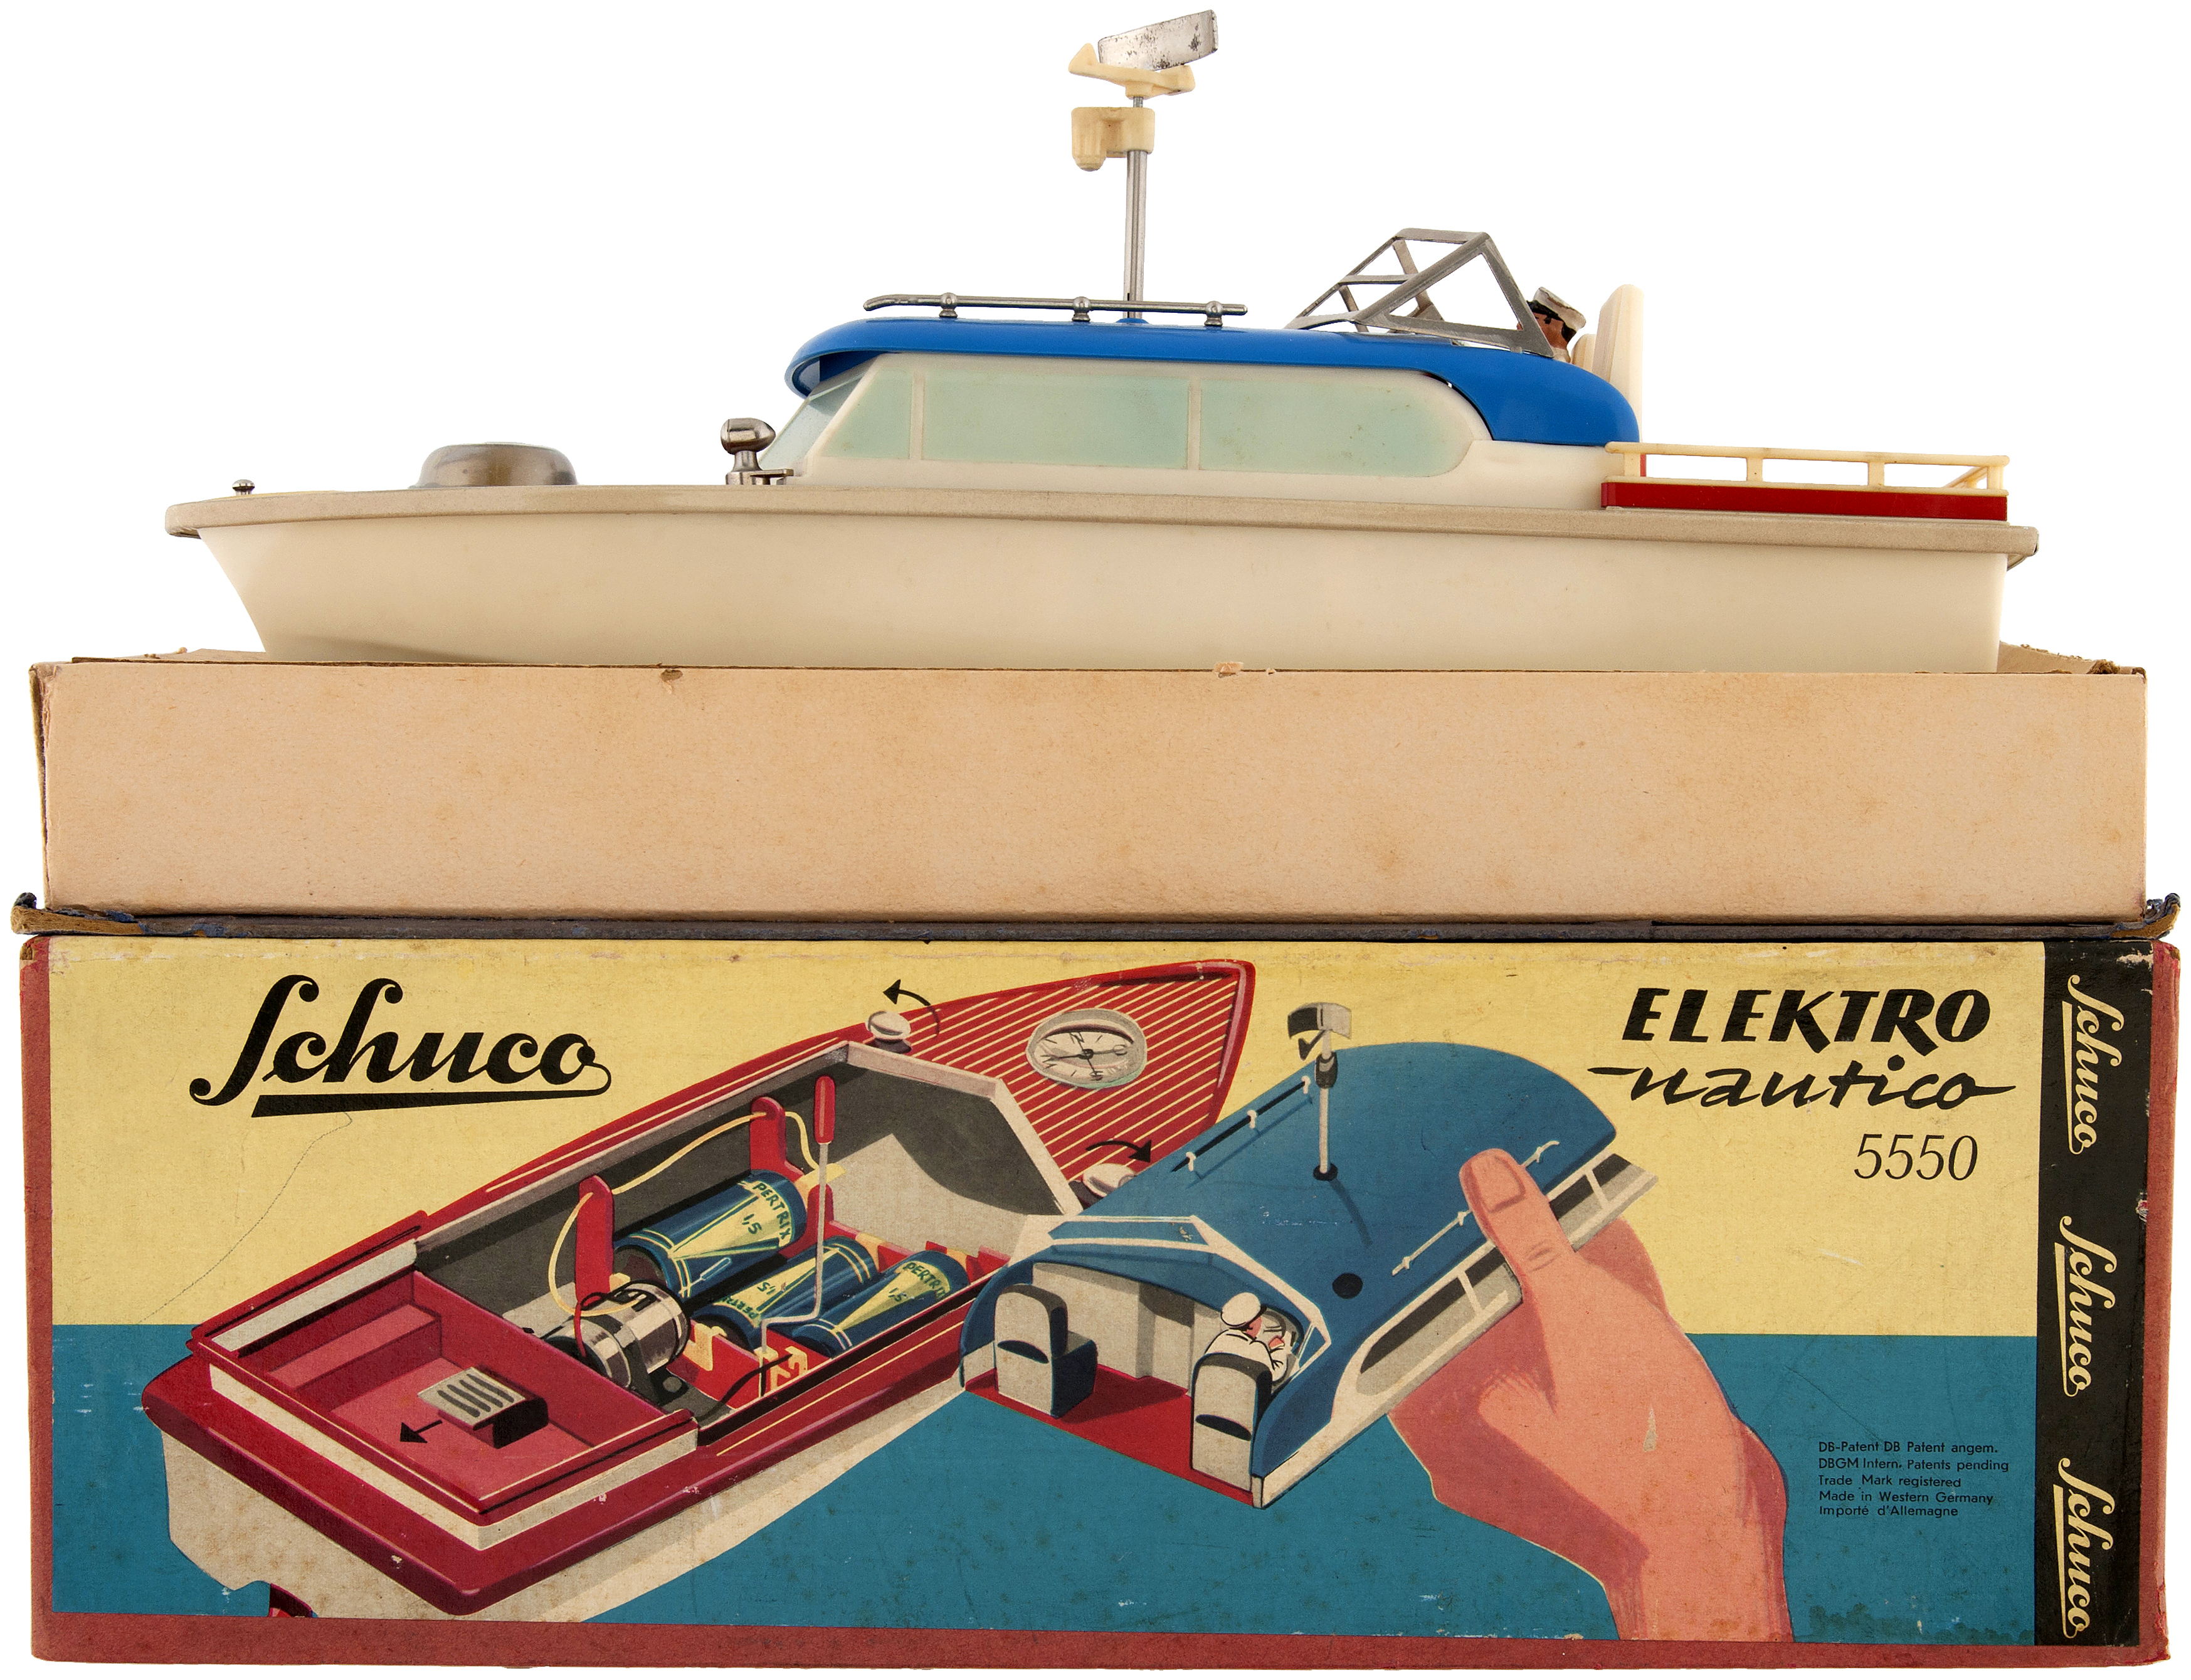 Hake's - SCHUCO ELEKTRO NAUTICO 5550 BOXED BATTERY-OPERATED BOAT.